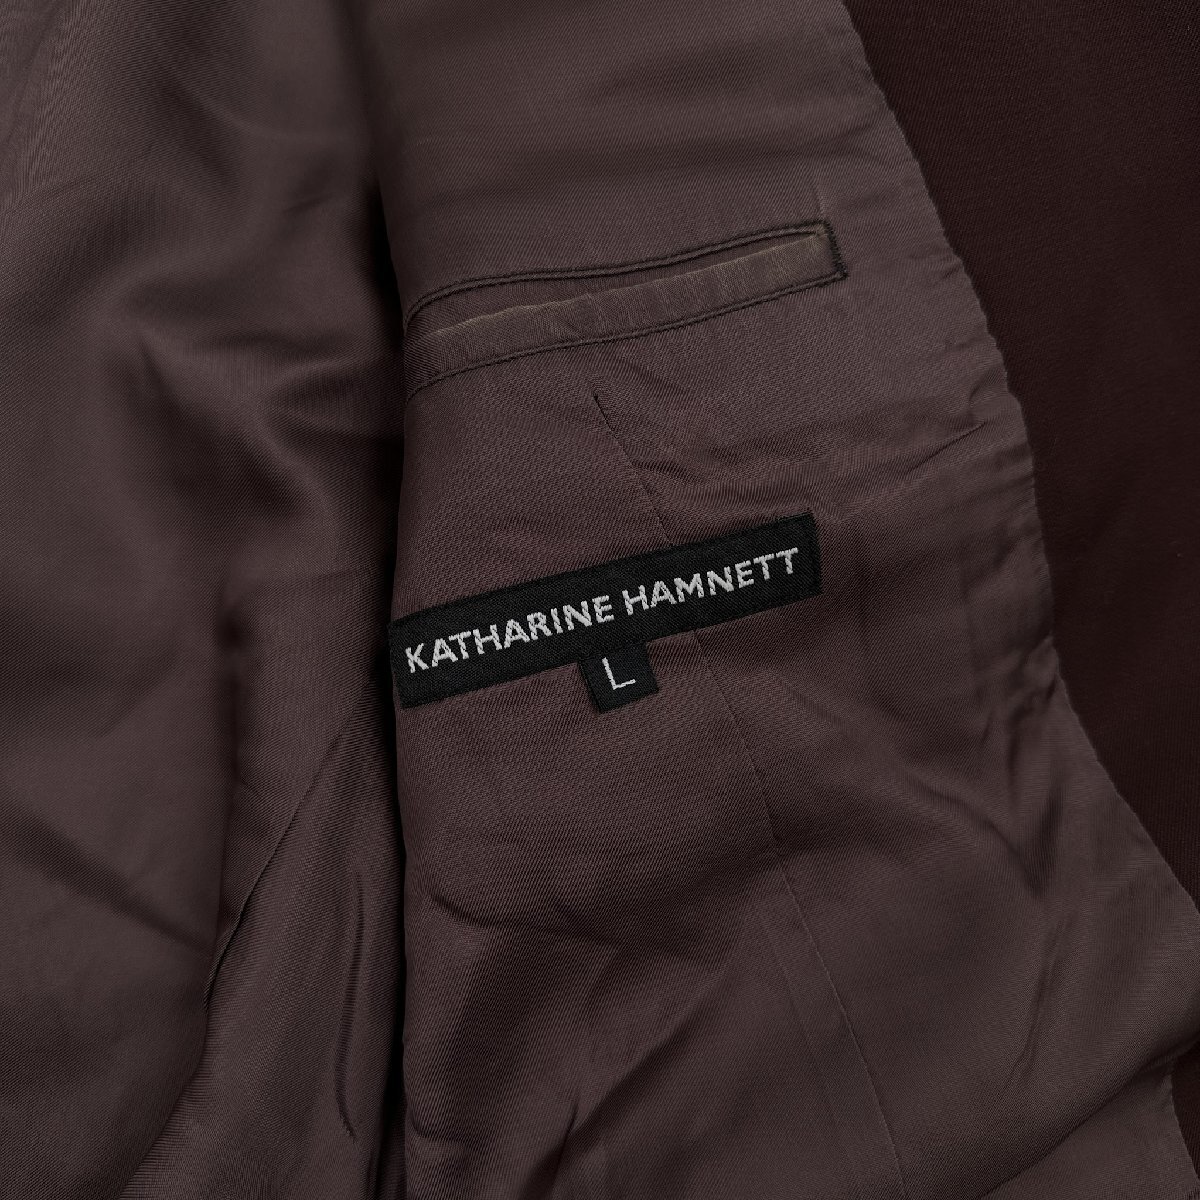 90s Vintage the first period *KATHARINE HAMNETT Katharine Hamnett 3B tailored jacket size L / black tag / red light brown group 